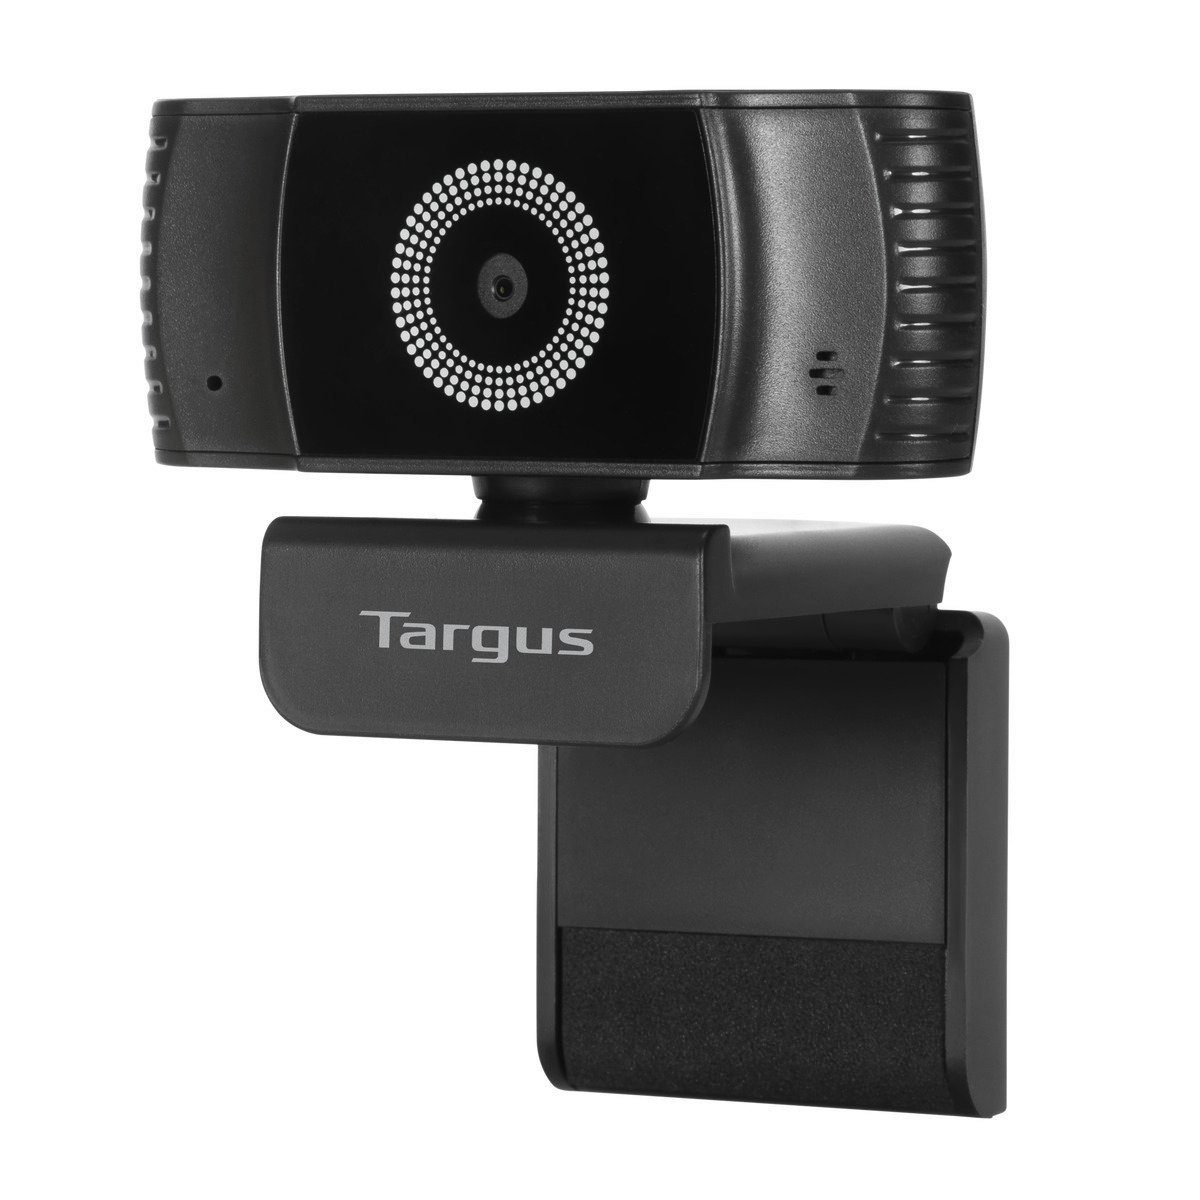 Plus Targus Autofokus Full Webcam mit Webcam HD Webcam